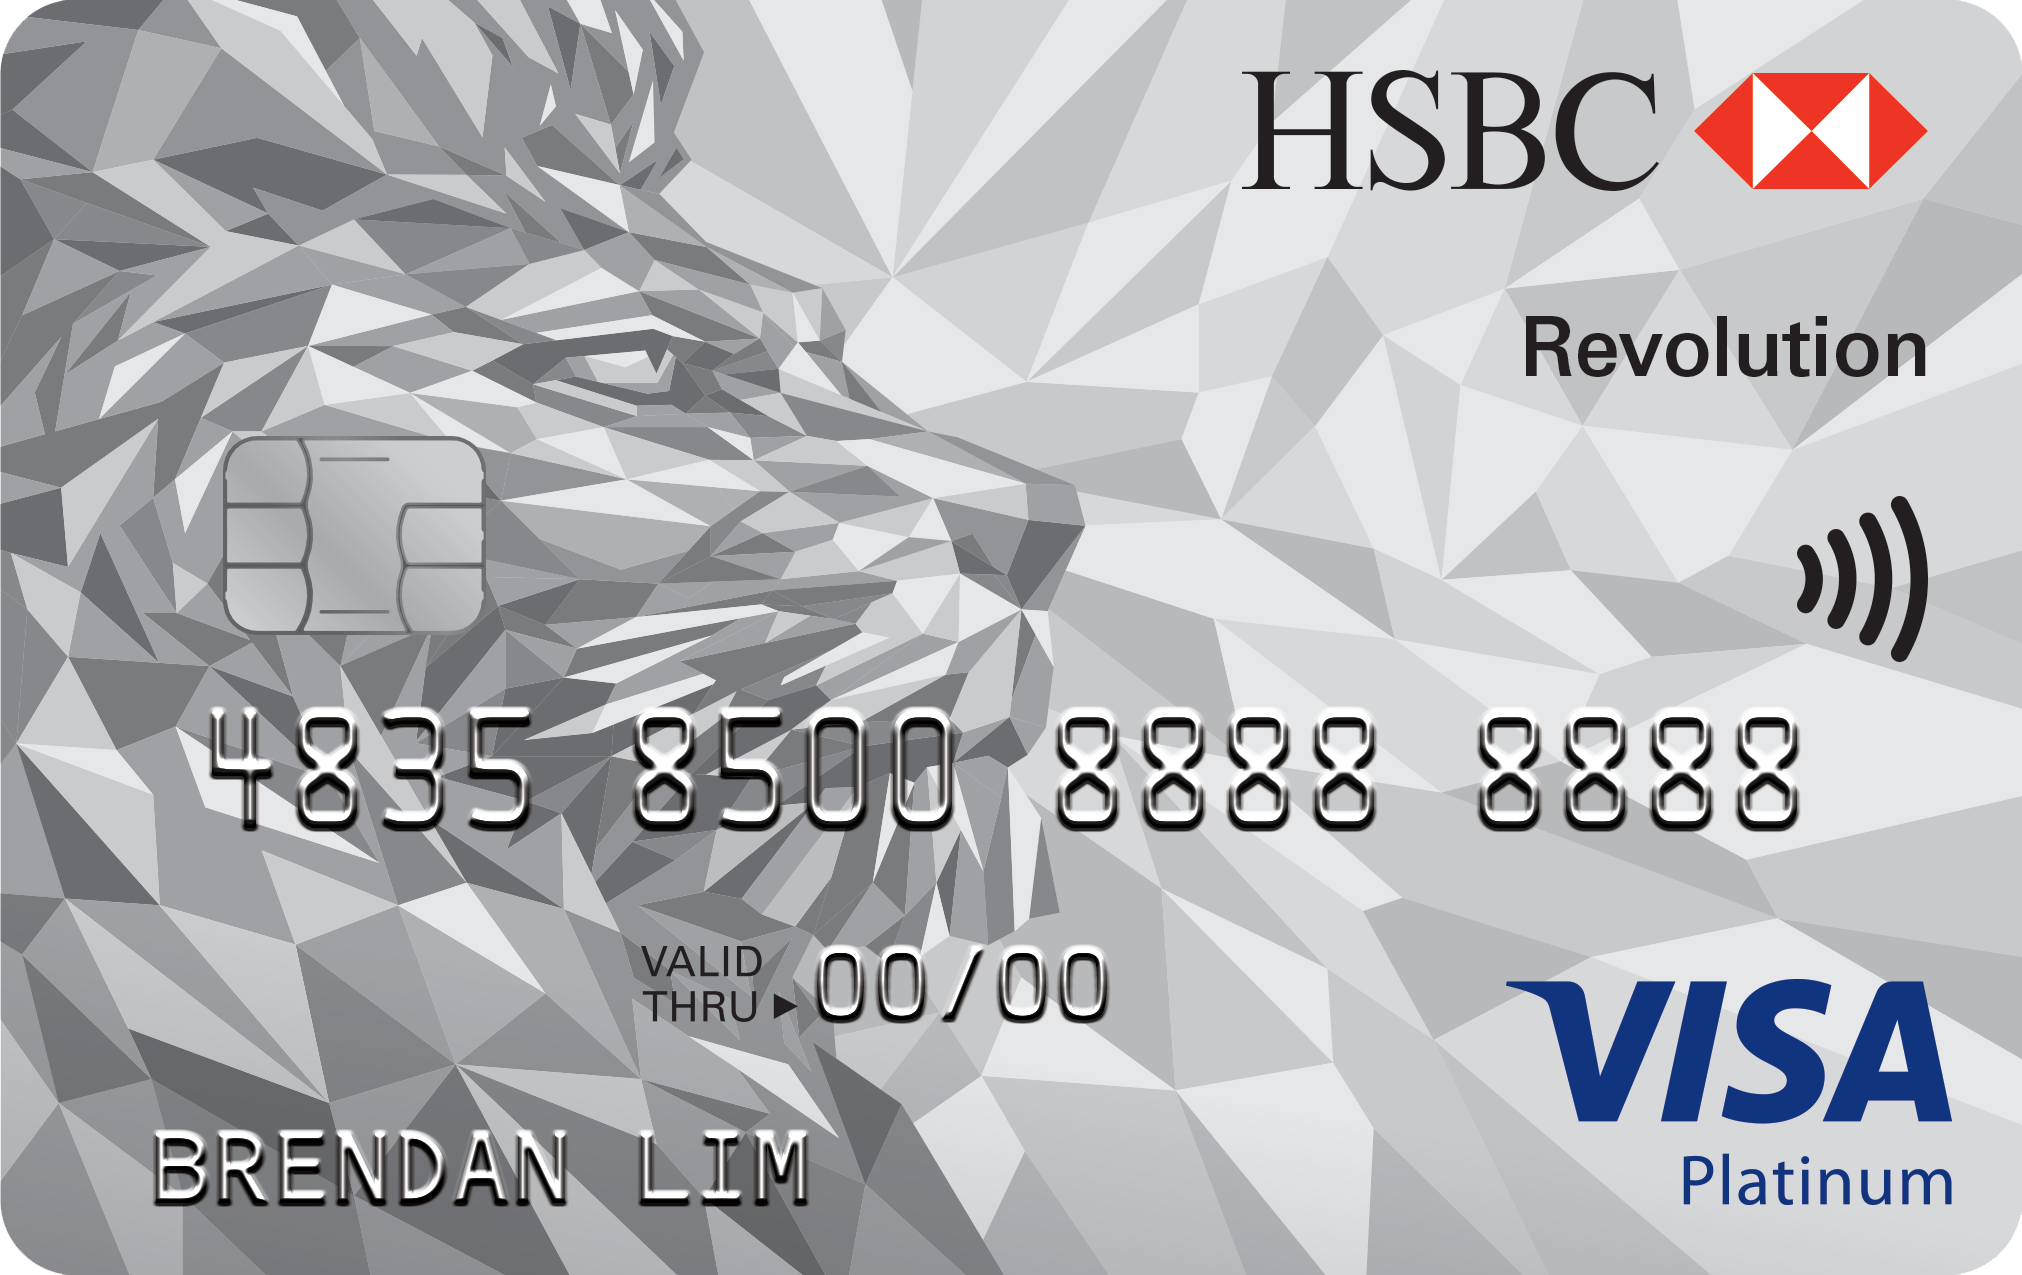 HSBC-HSBC Revolution Credit Card